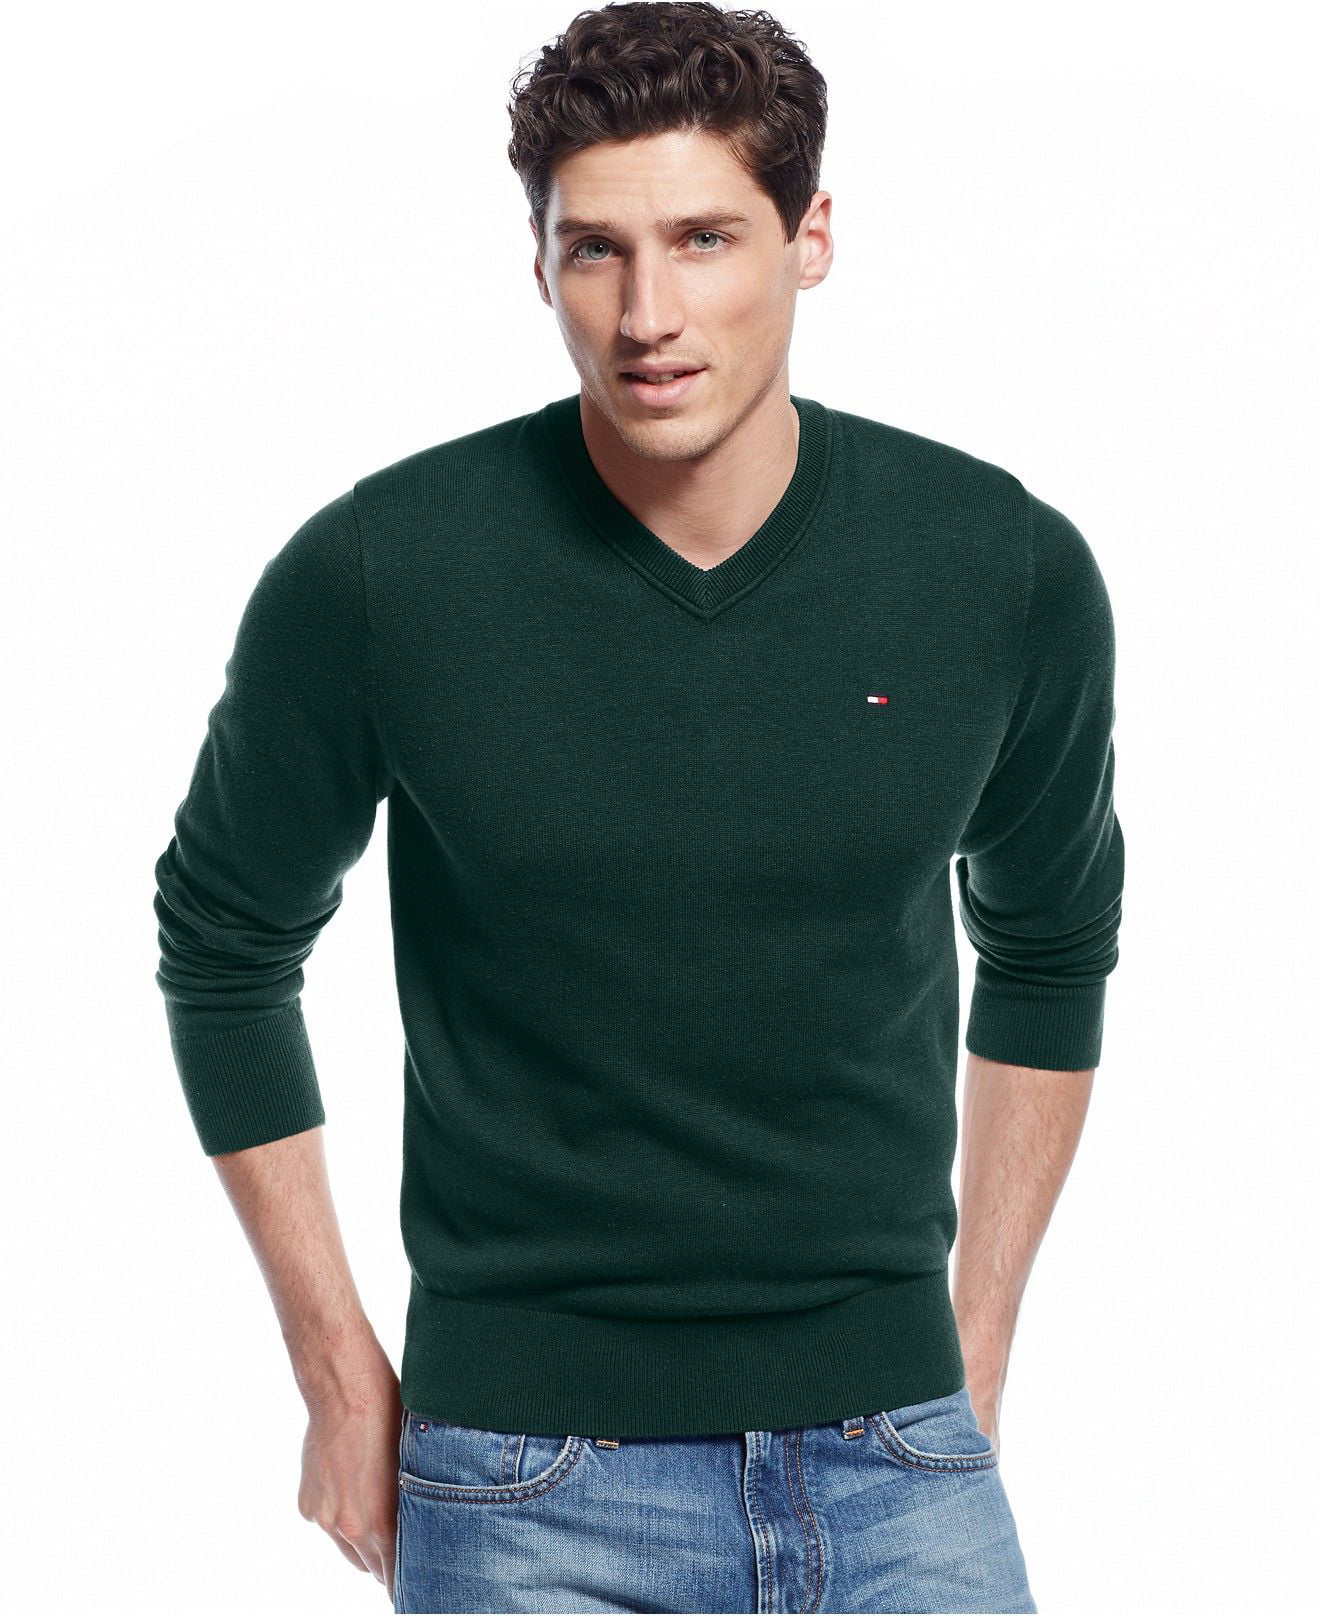 Verrassend genoeg Verwaand navigatie tommy hilfiger new dark green mens 2xl ribbed v-neck pullover sweater -  Walmart.com